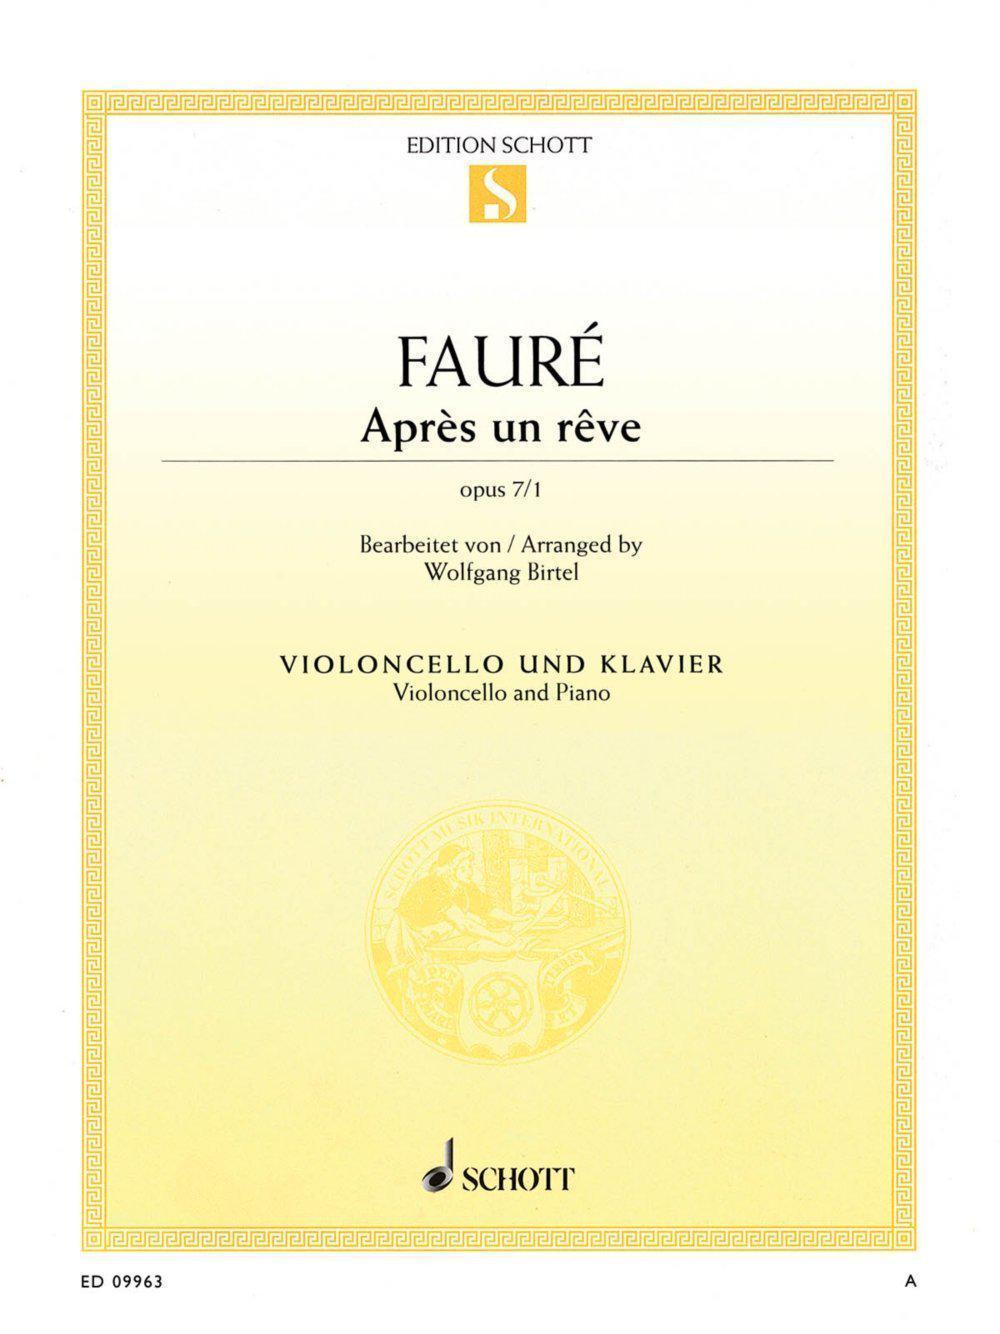 Faure: Apres un Reve for Cello and Piano, Op. 7 No. 1